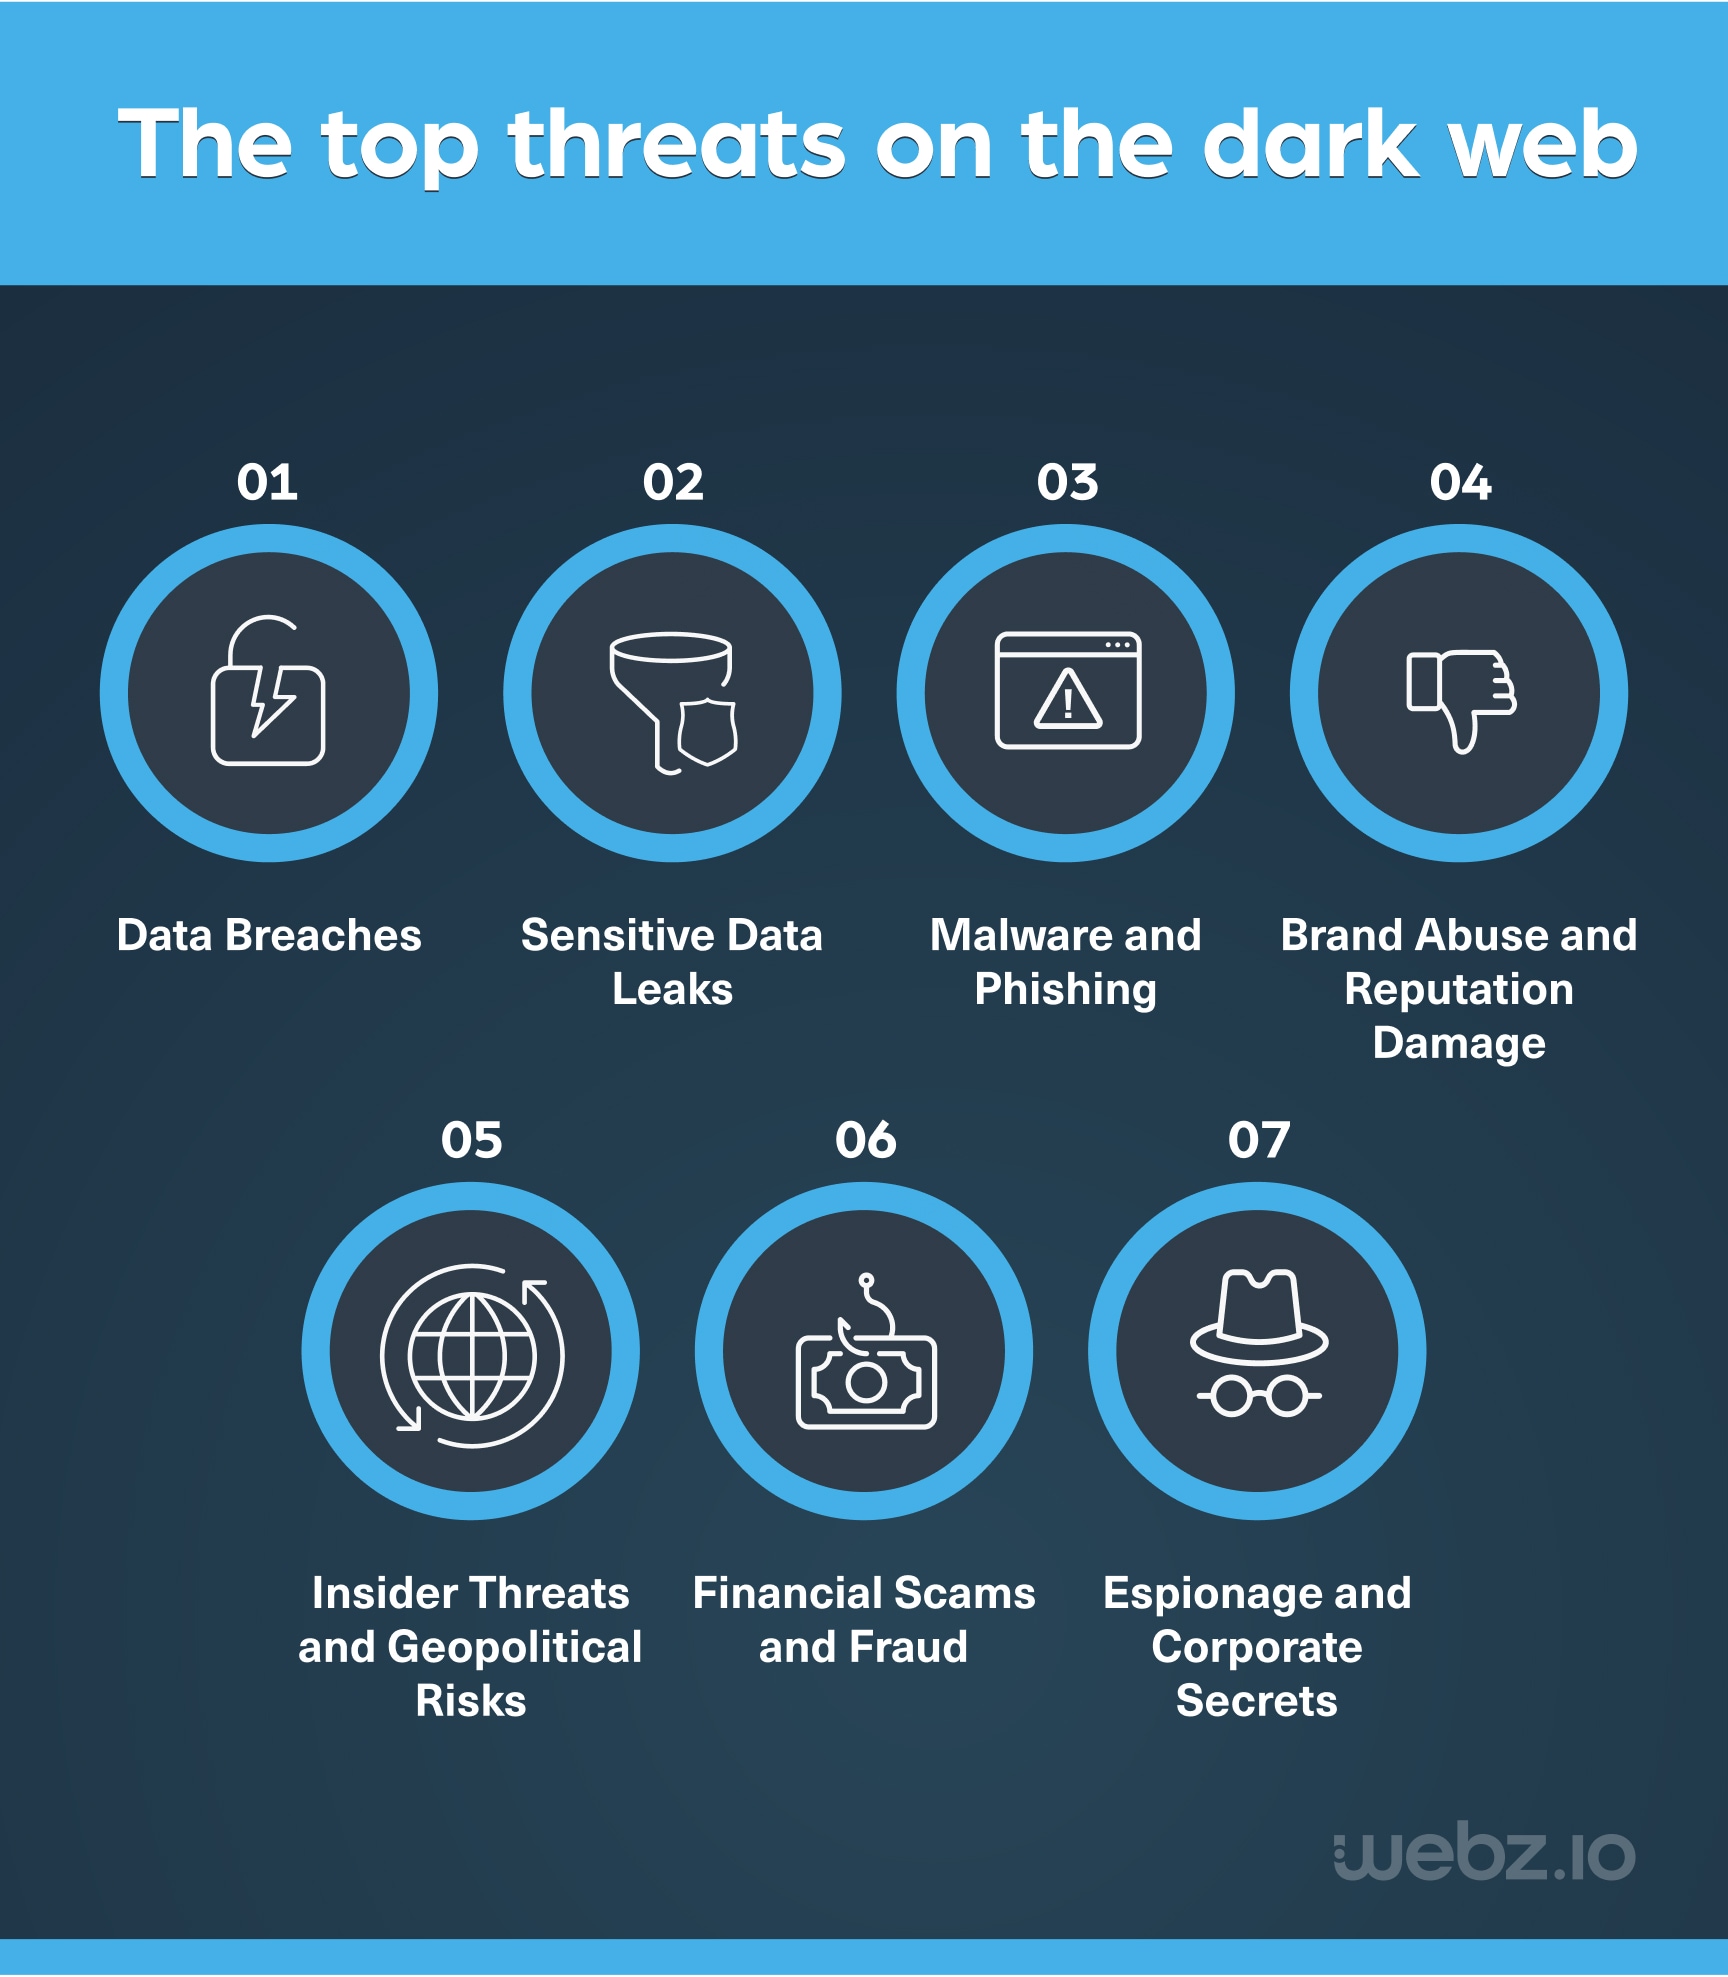 The top threats on the dark web